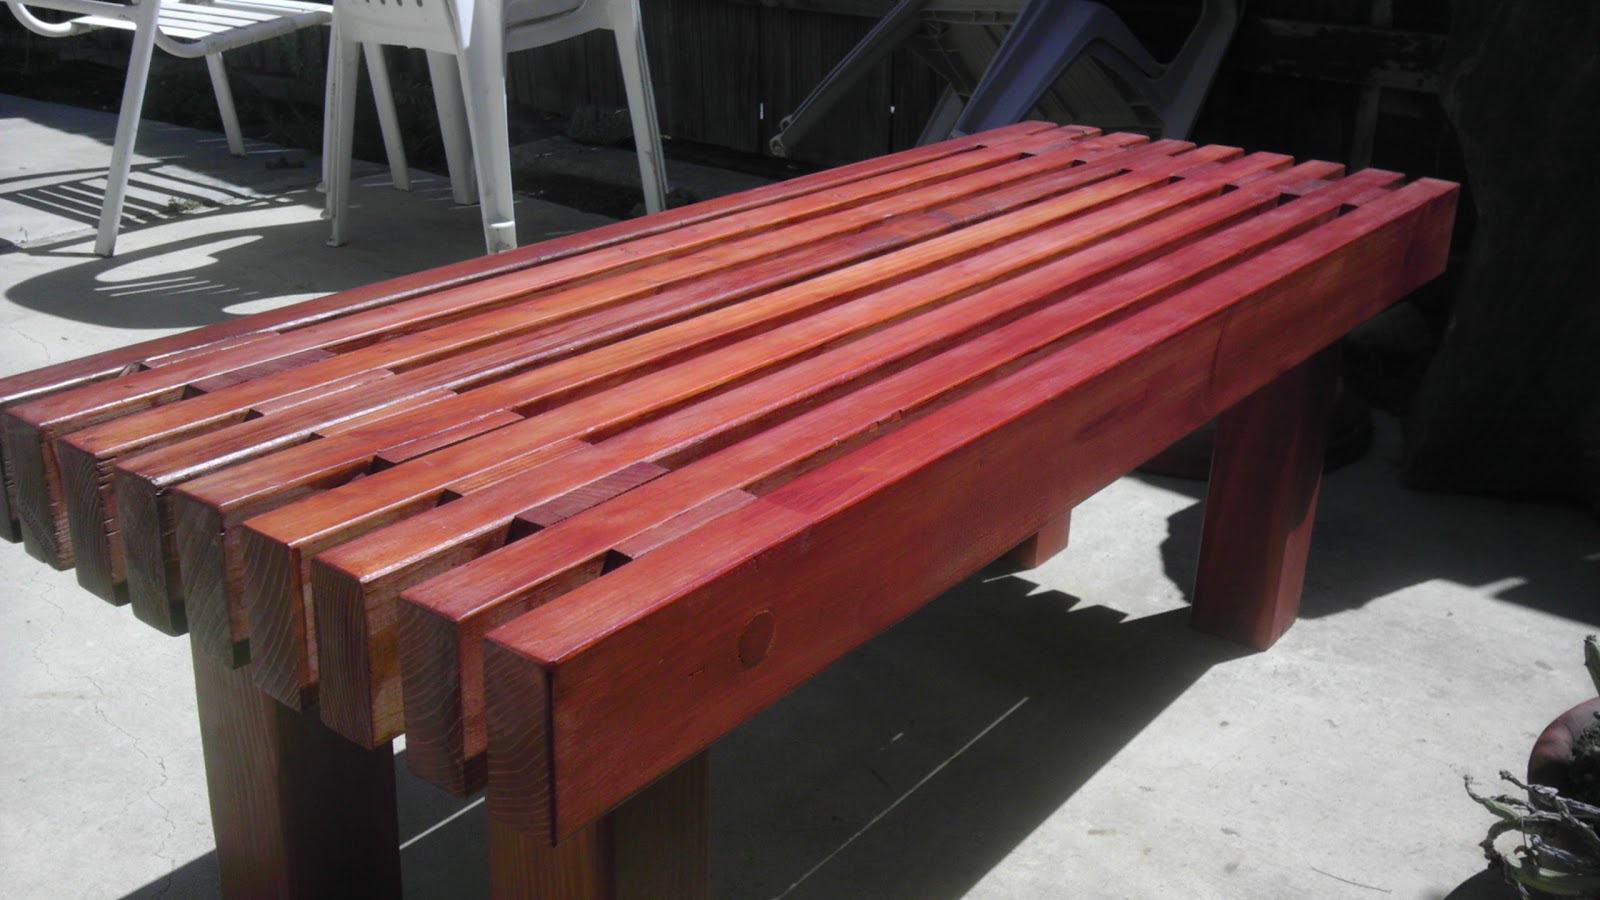 Woodworking redwood bench design PDF Free Download